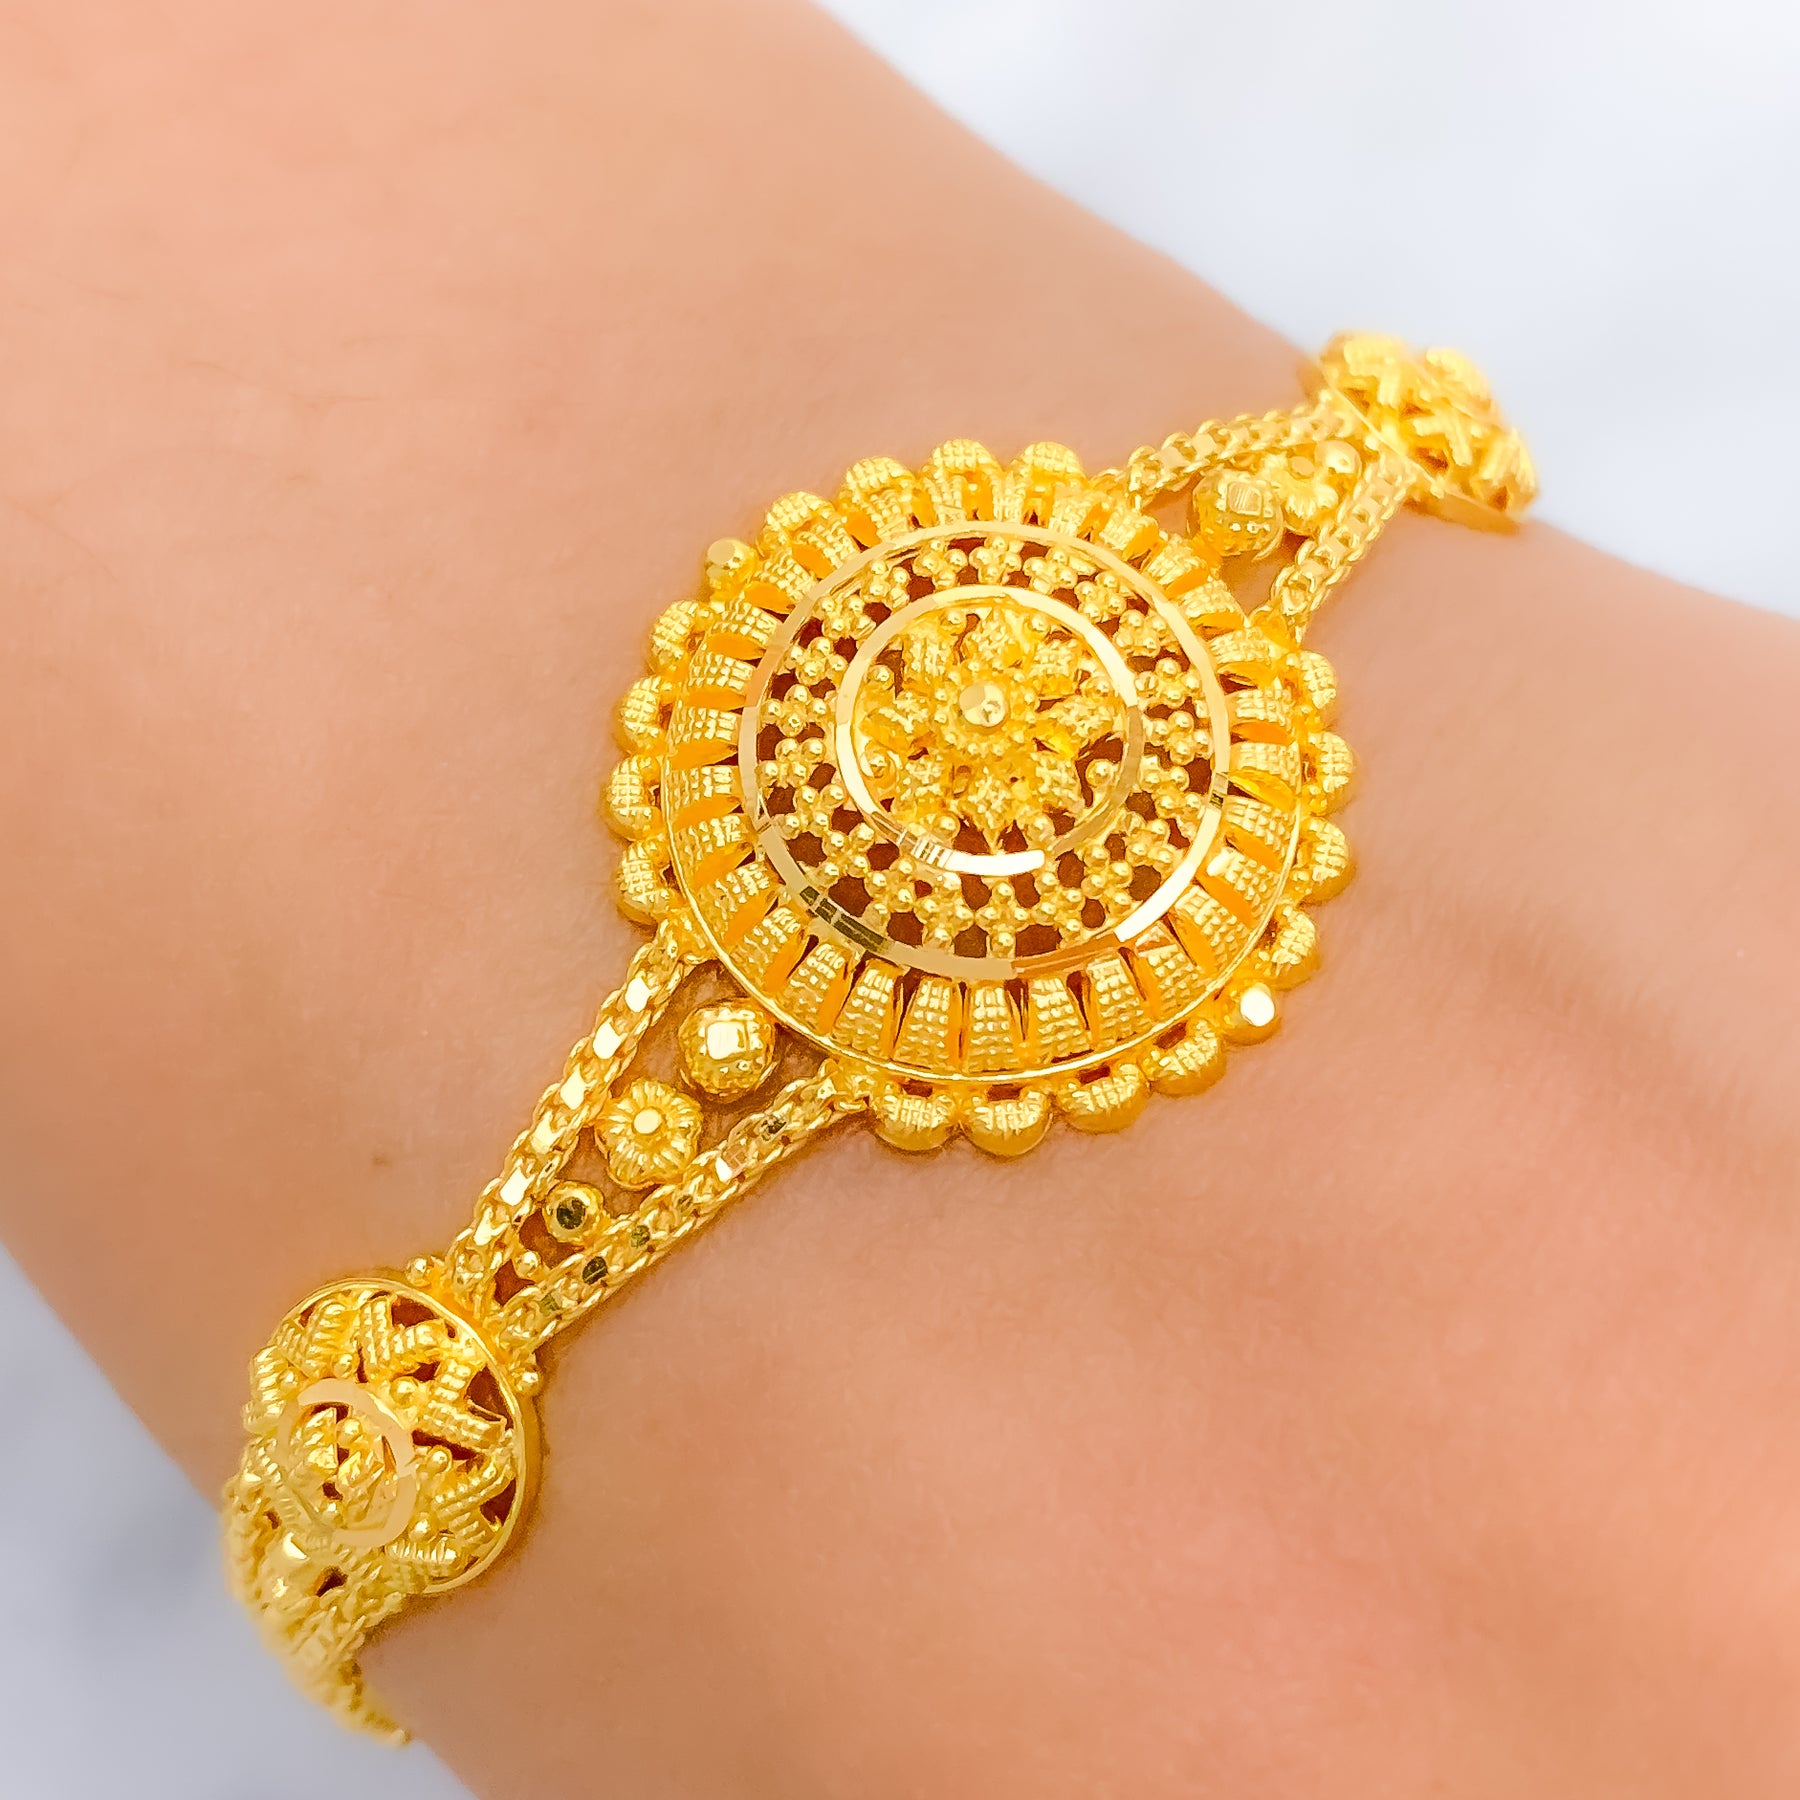 Kalyan Jewellers, Udupi - Jewellery - Udupi City - Weddingwire.in